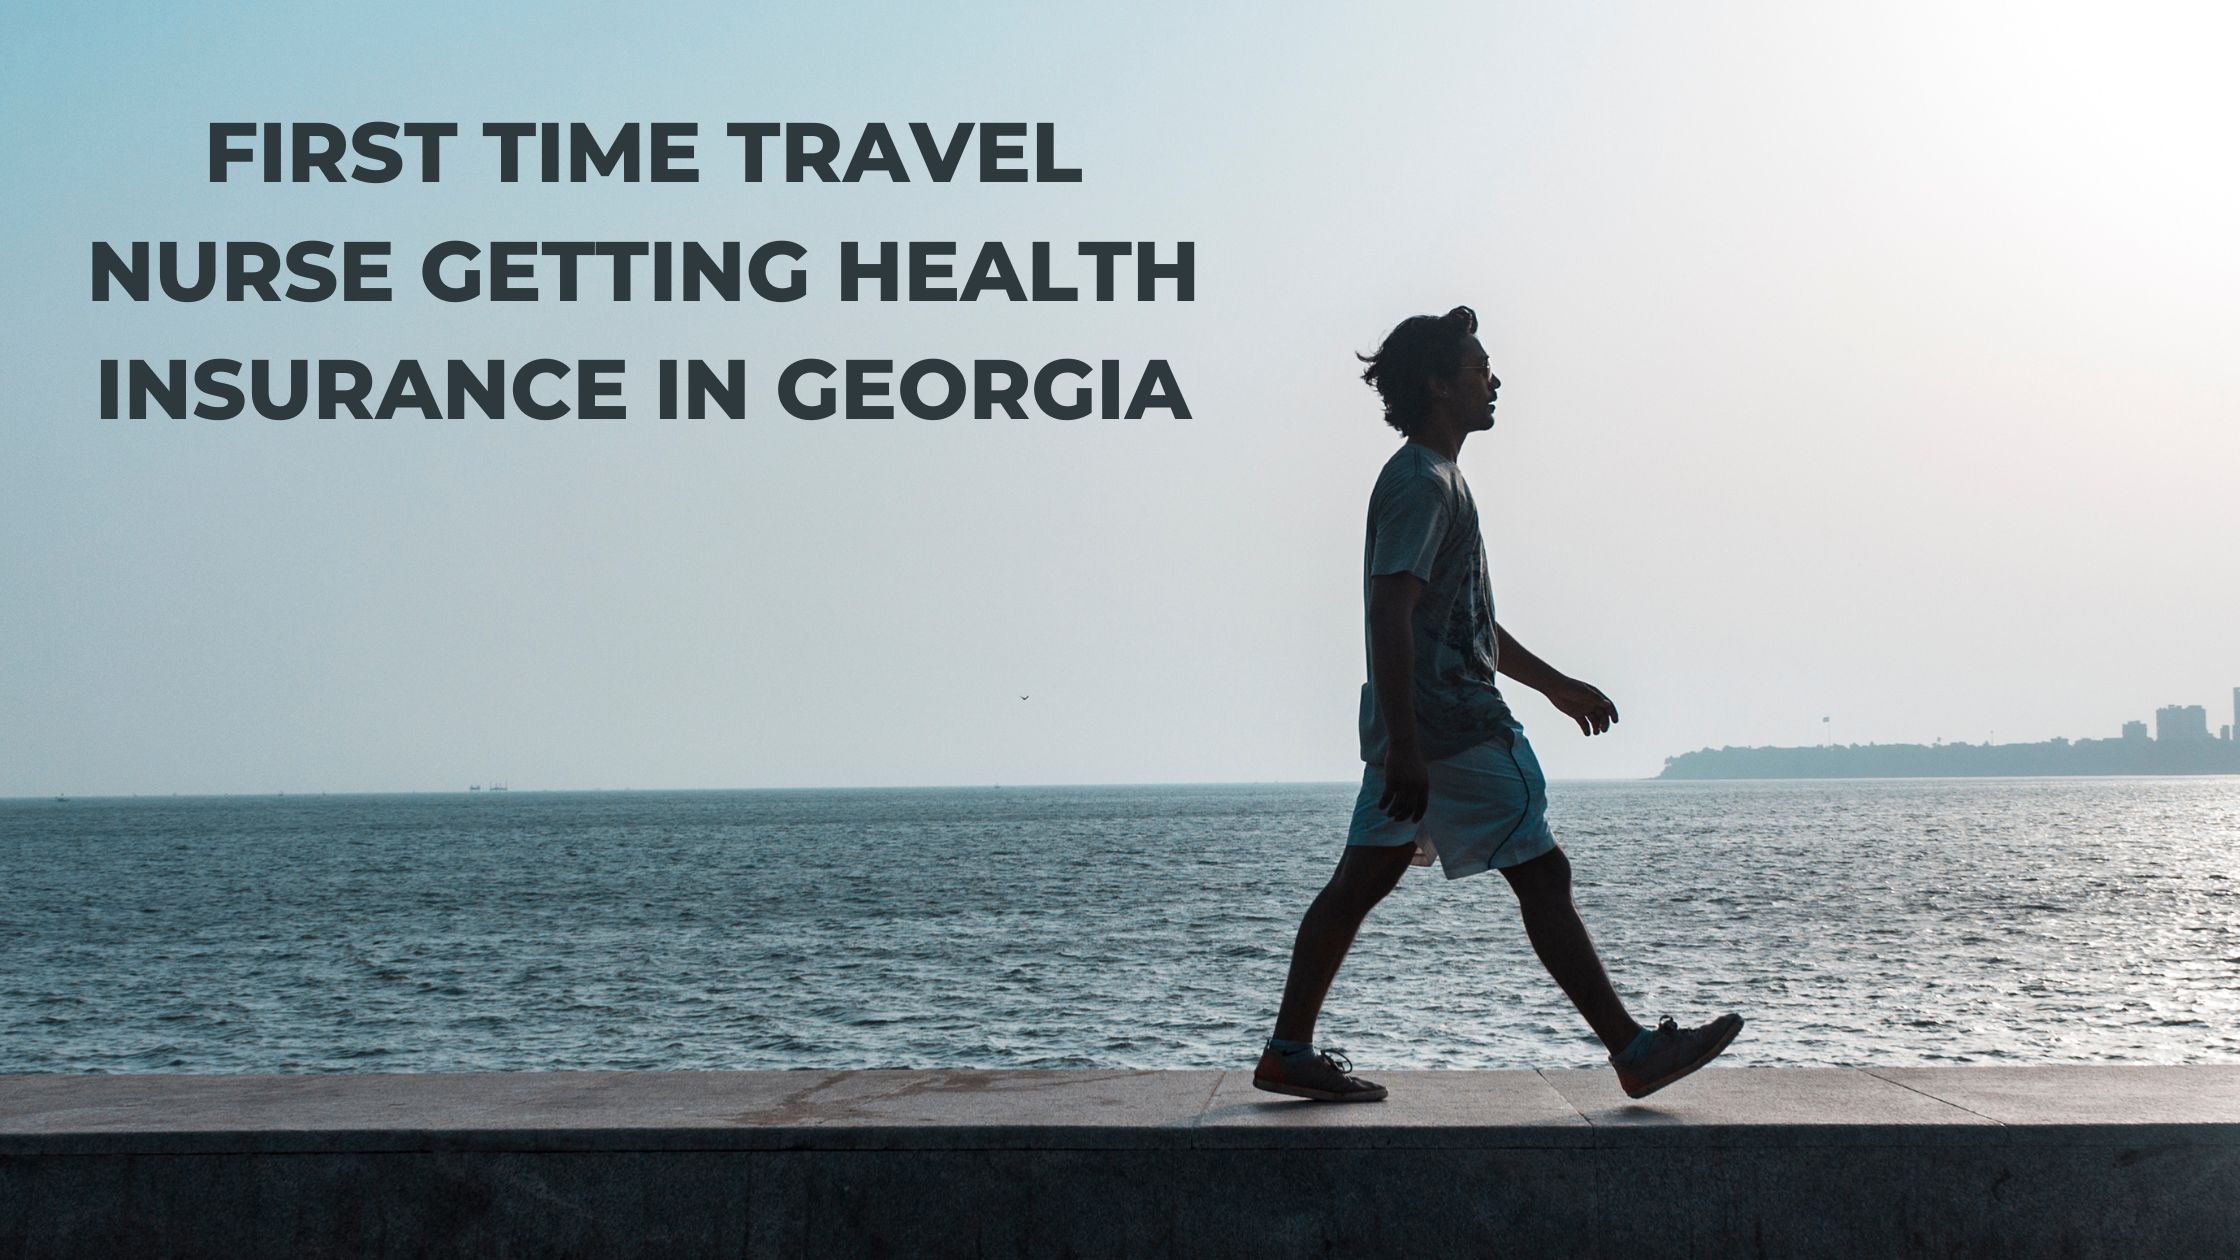 First time travel nurse getting health insurance in Georgia